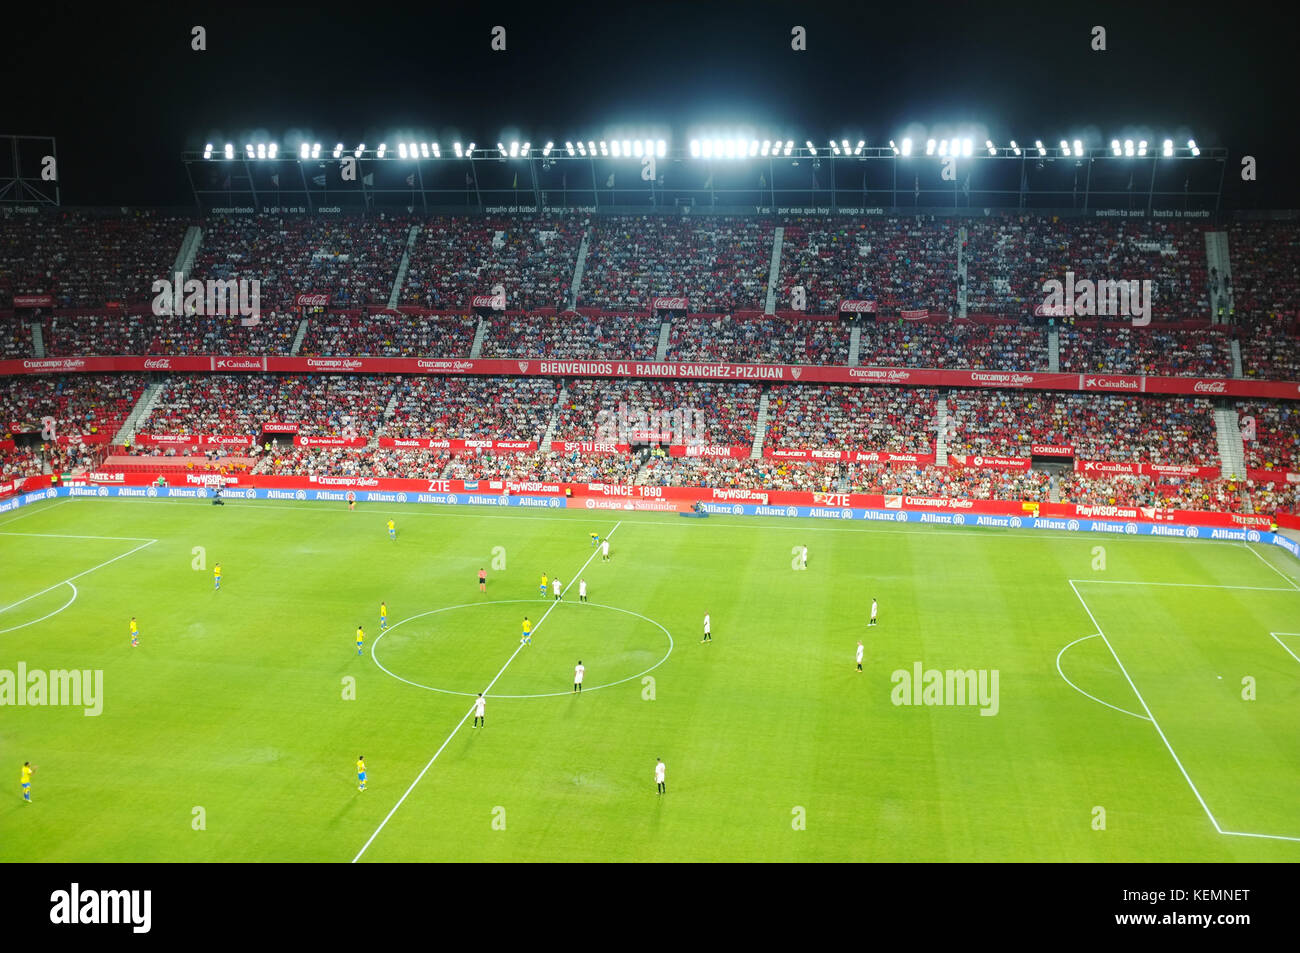 Inside the Ramón Sánchez Pizjuán Stadium, Sevilla FC vs Las Palmas, Seville, Andalucia, Spain, September 2017 Stock Photo